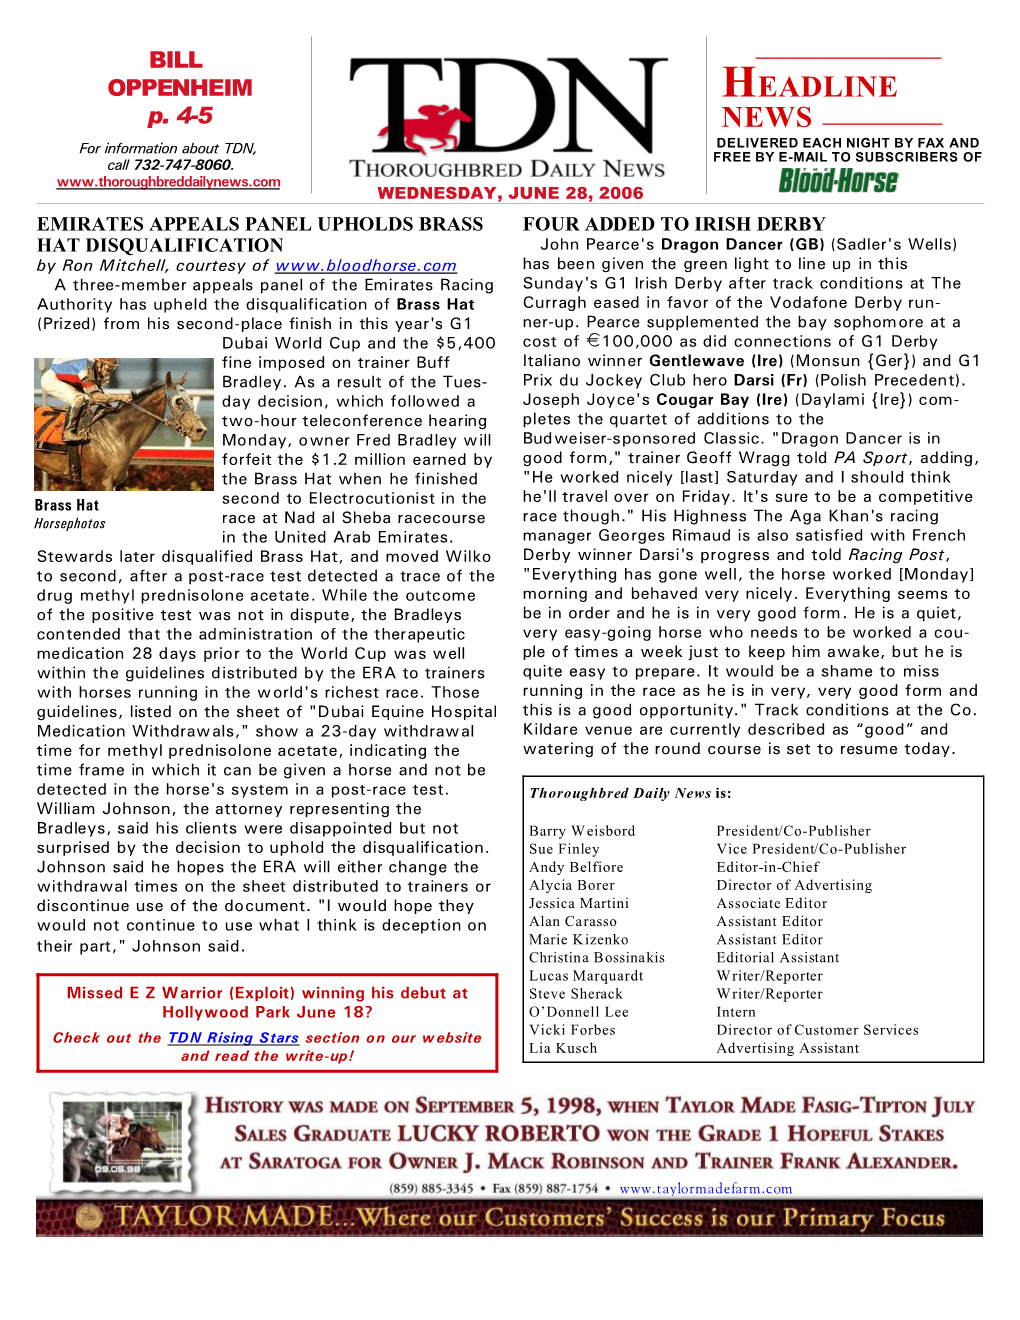 HEADLINE NEWS • 6/28/06 • PAGE 2 of 5